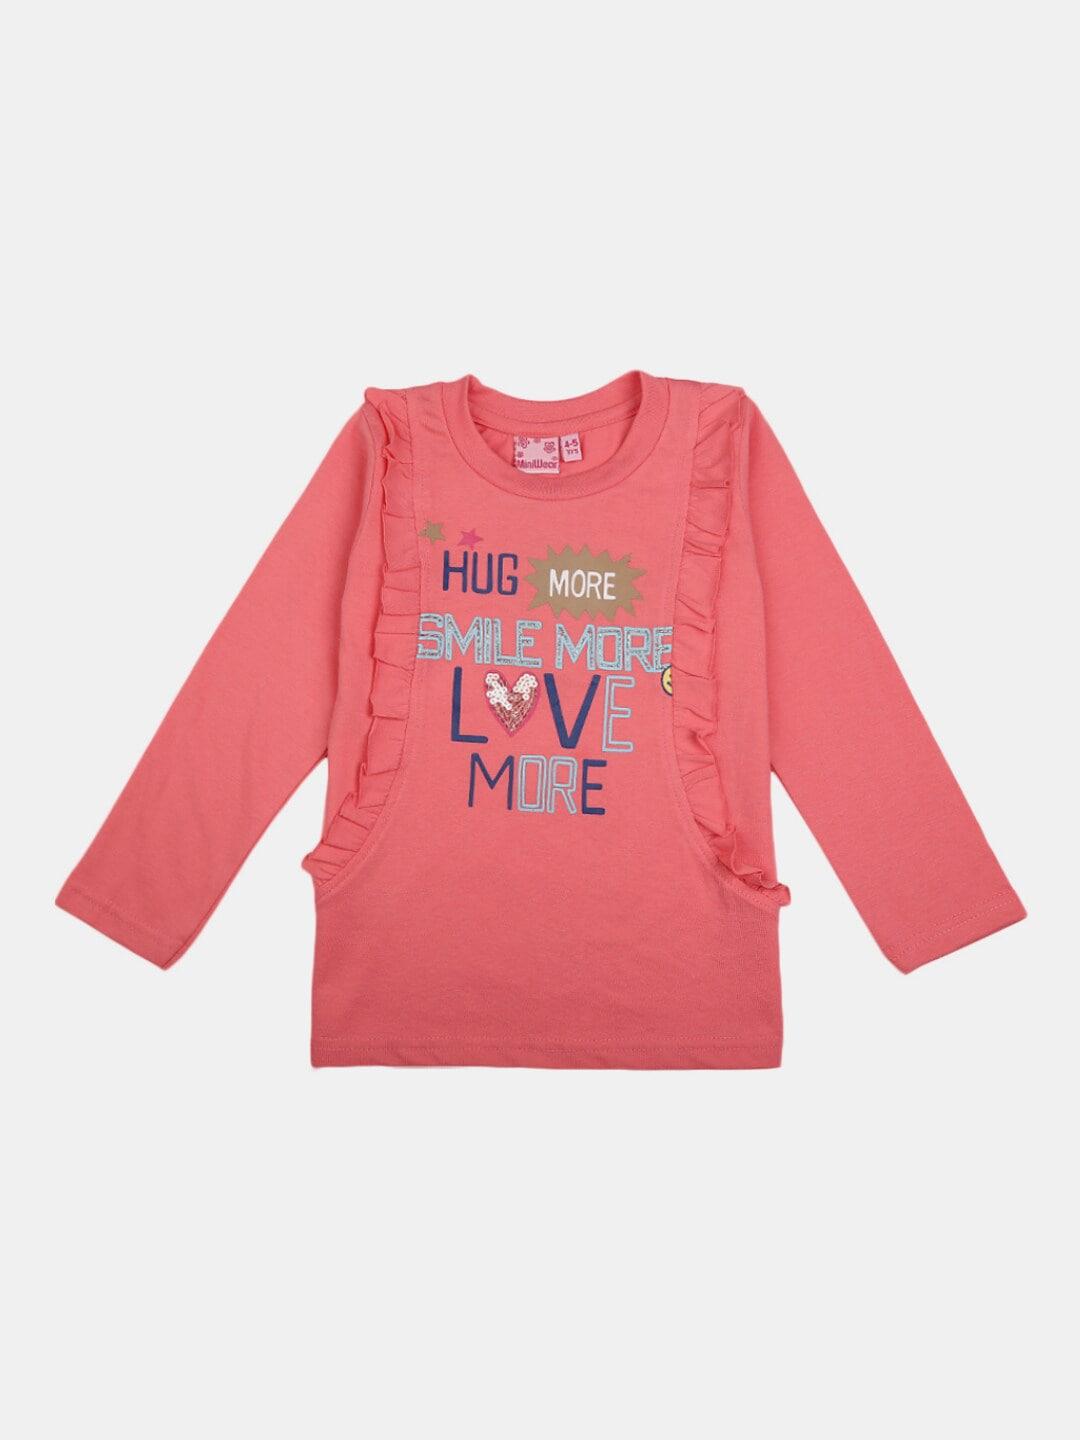 v-mart unisex kids pink & grey printed pure cotton t-shirt with pyjamas